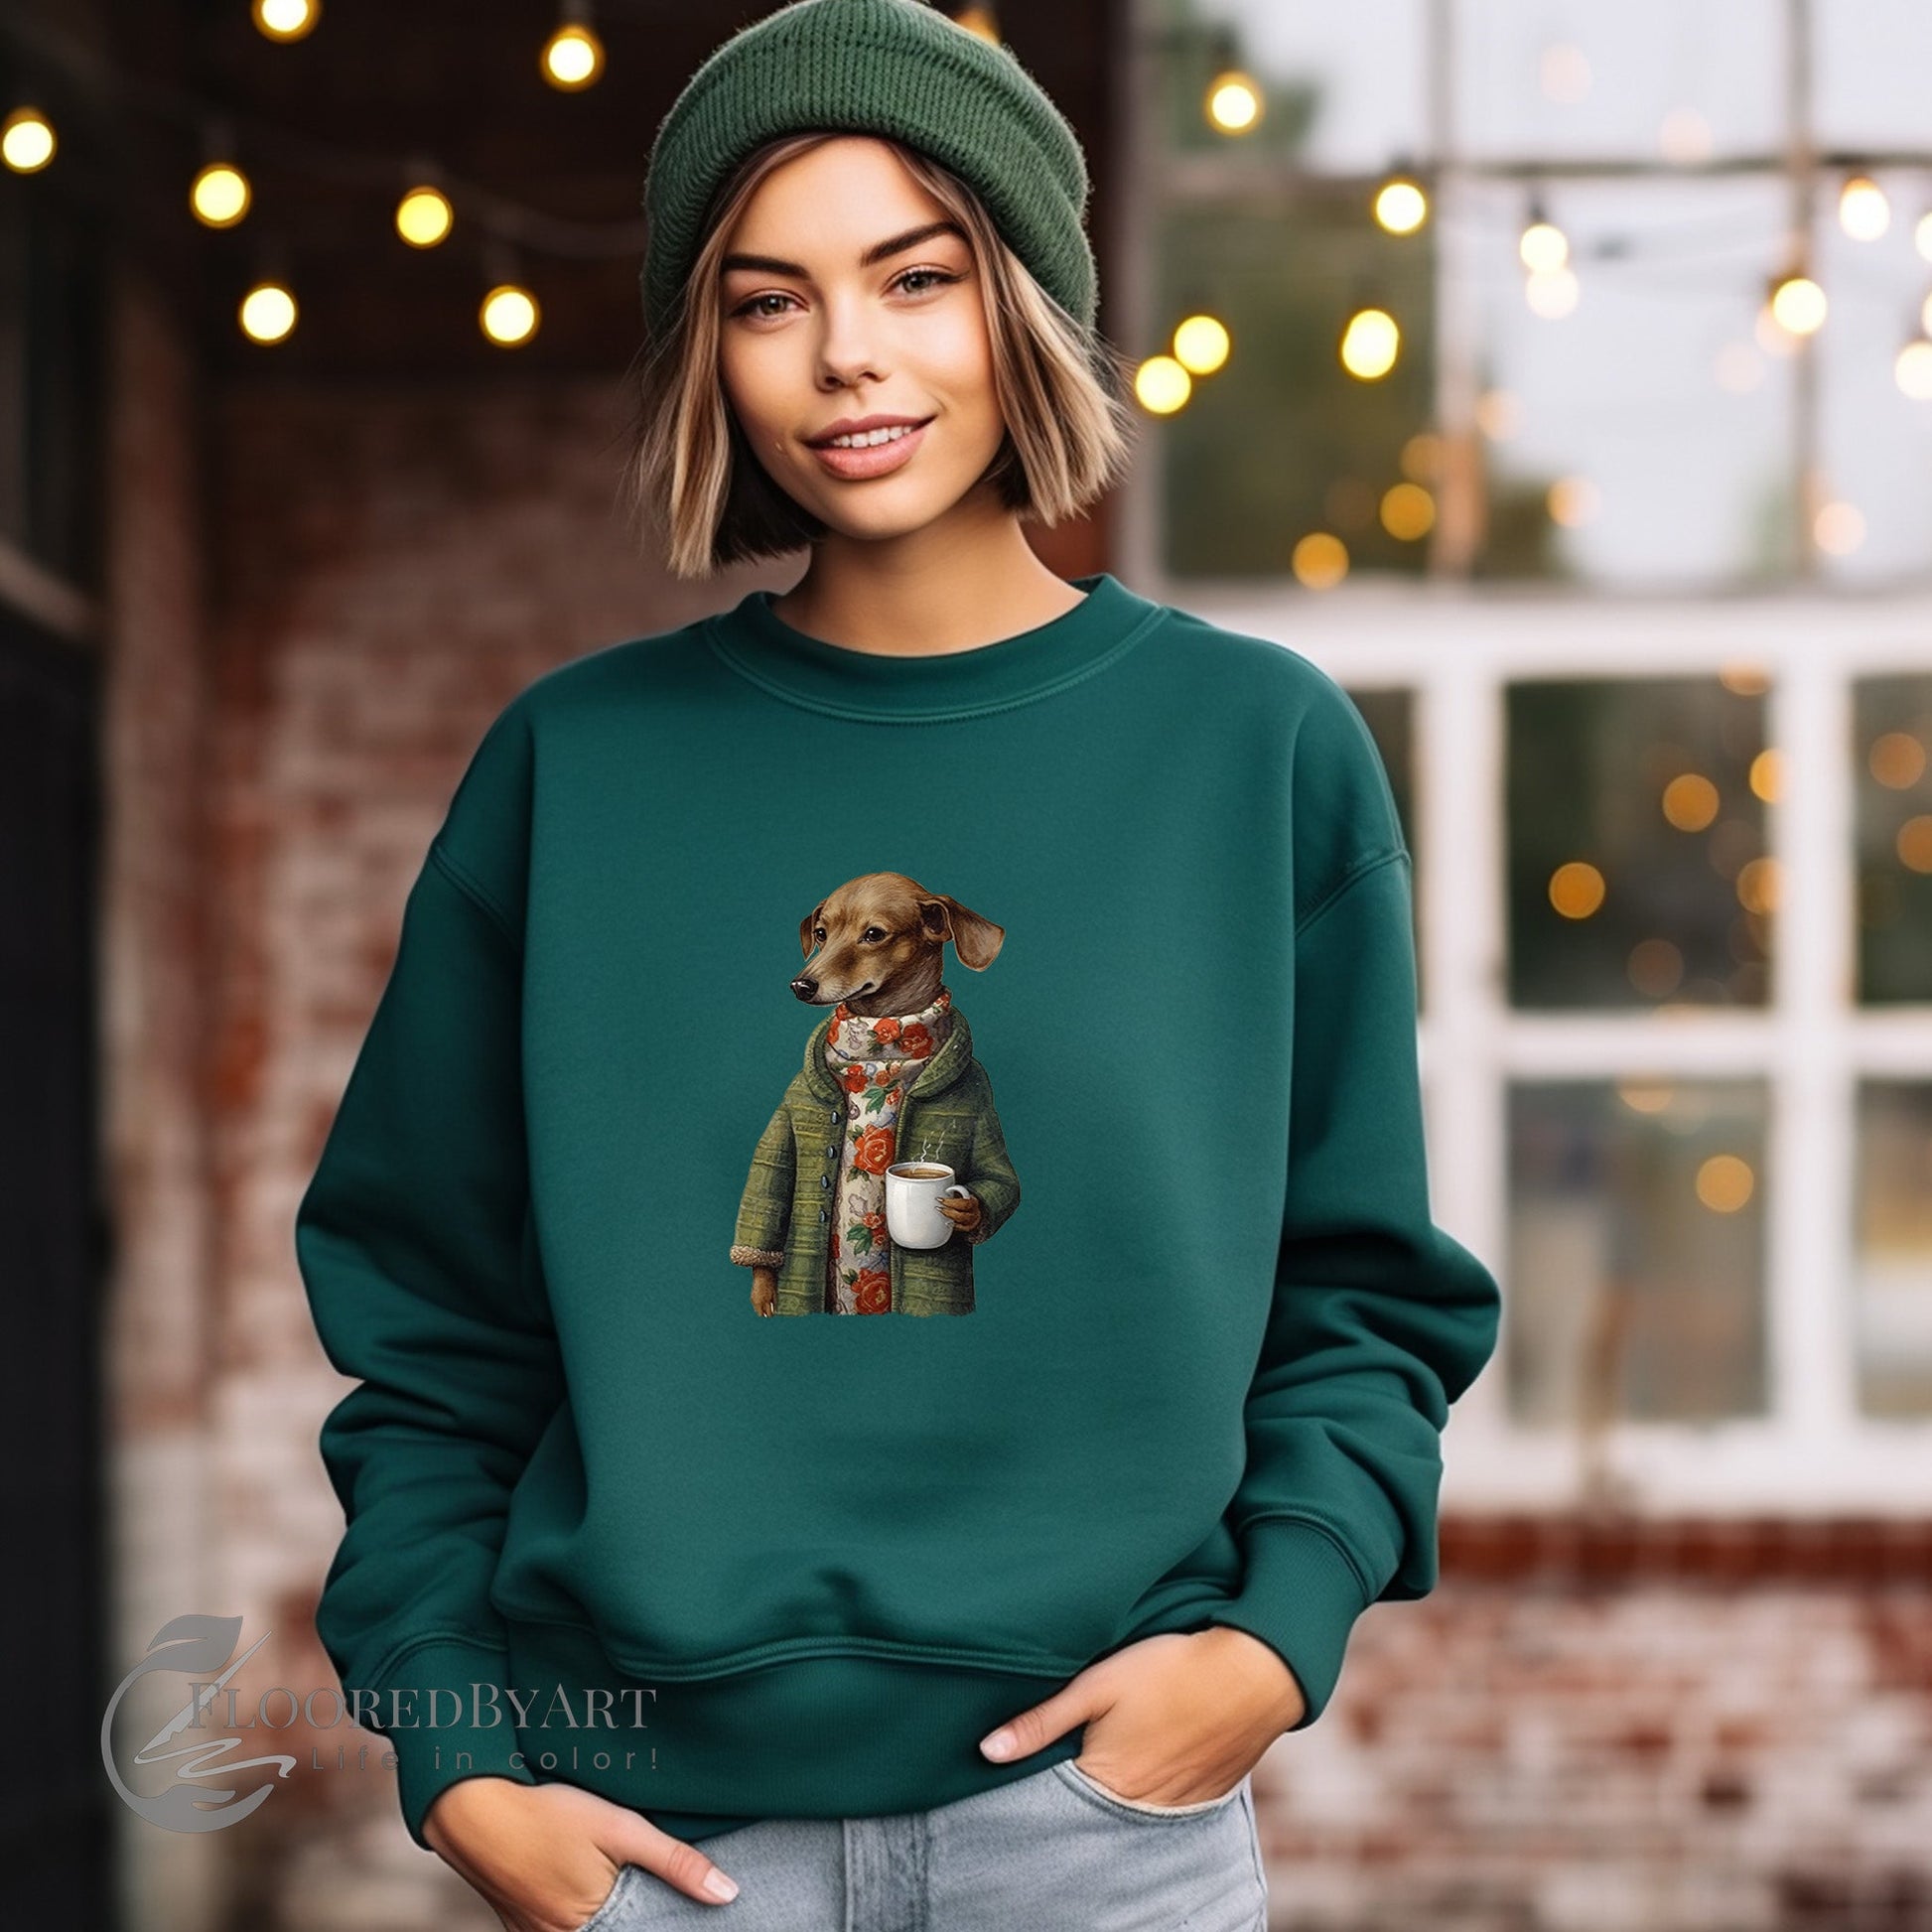 Dachshund Dog Sweatshirt, Dogs in Sweaters Art Collection, Unique Whimsical Boho Design - FlooredByArt